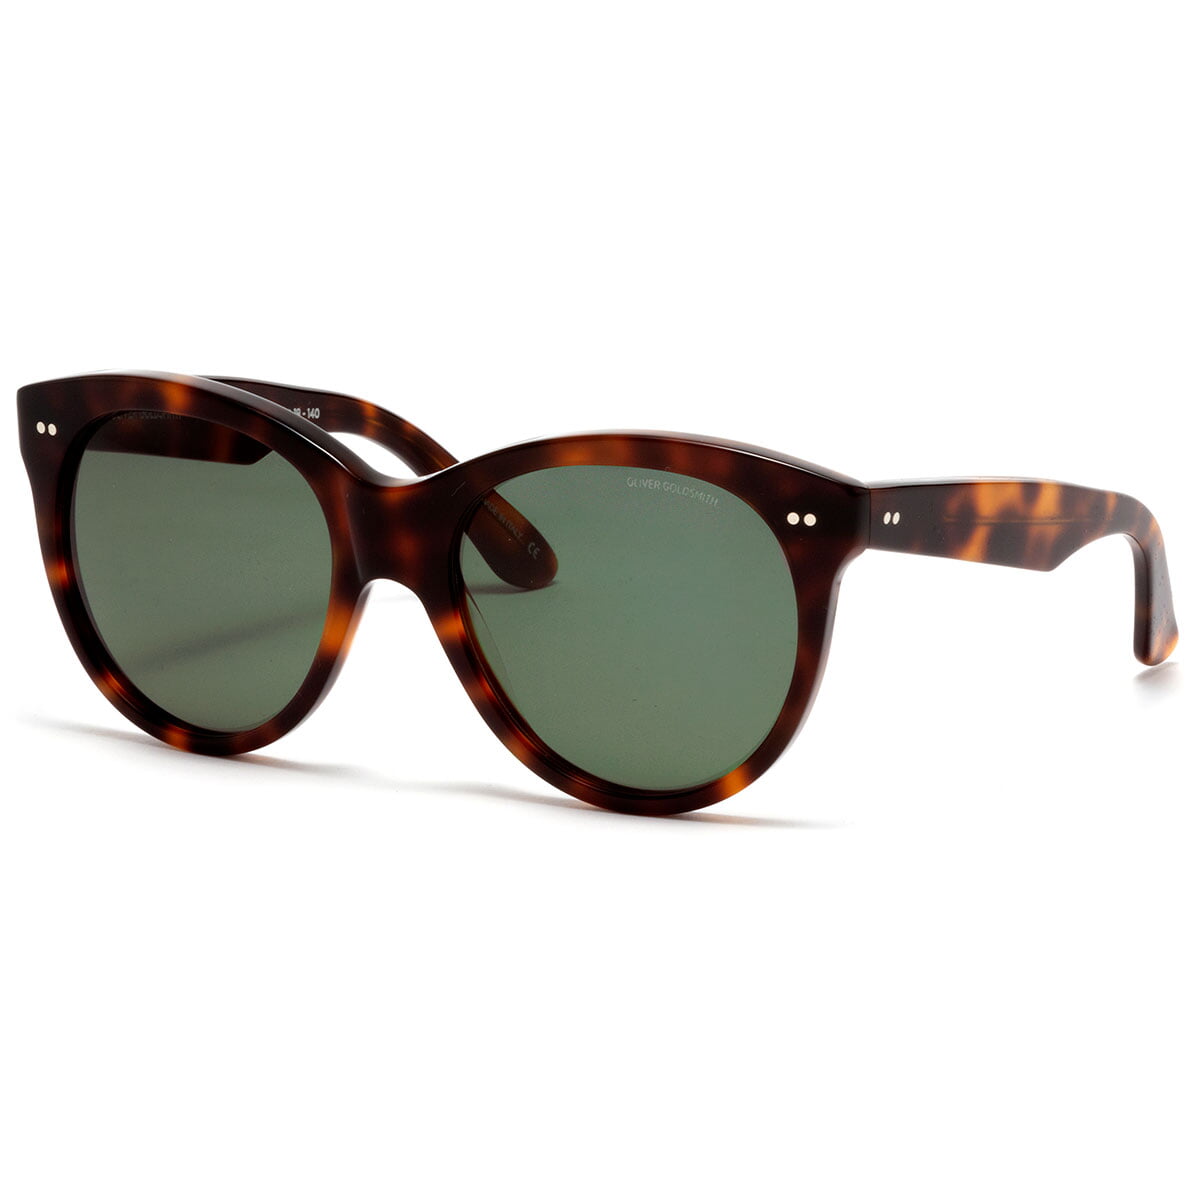 The 60s Bazaar  White sunglasses, Audrey hepburn, Funky glasses